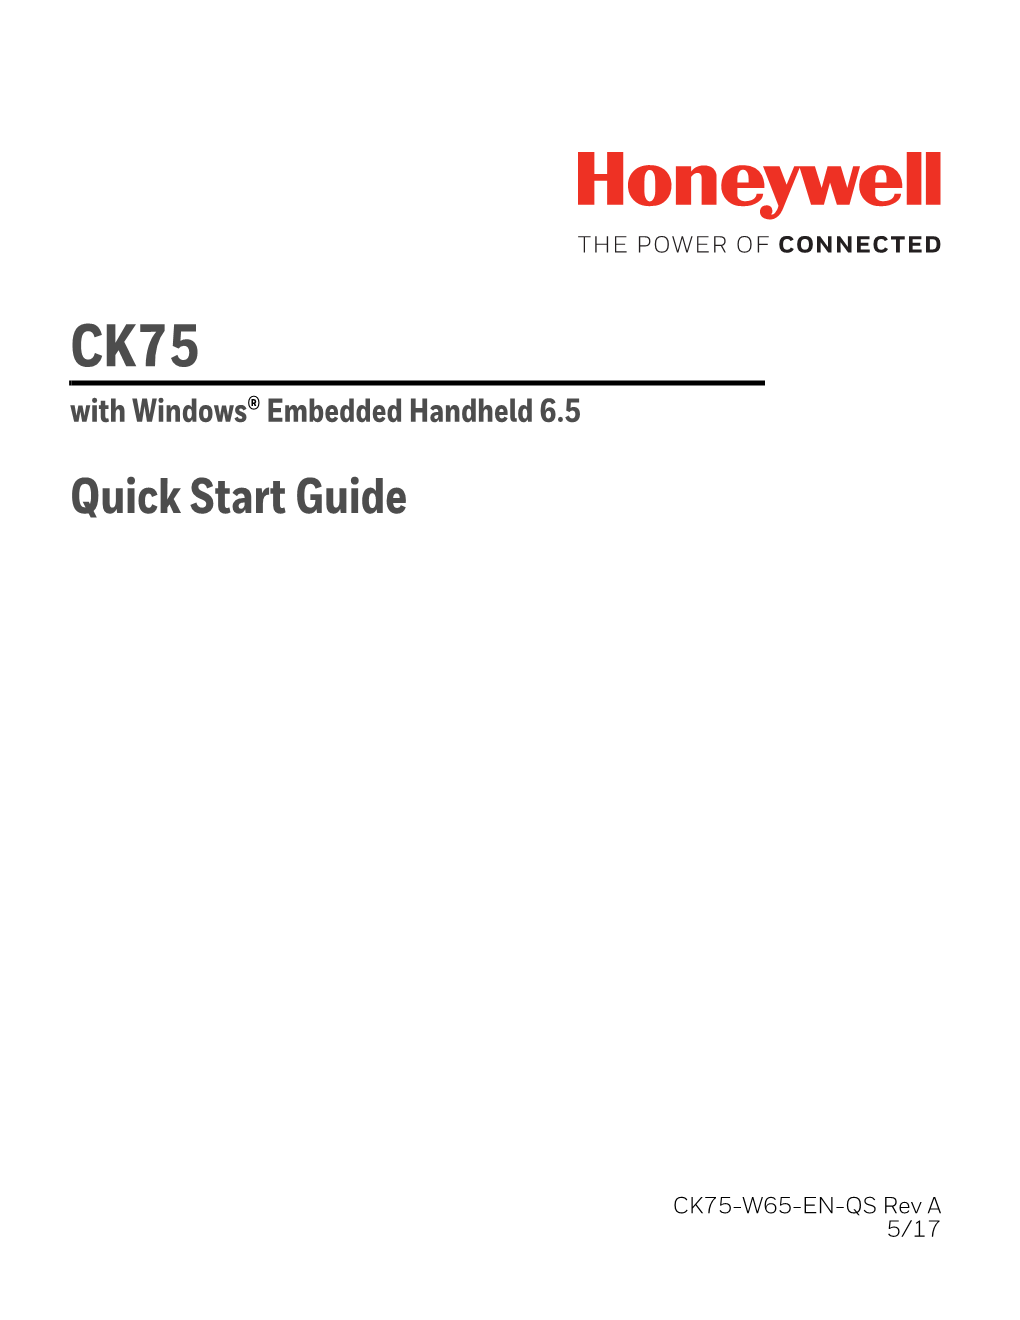 Quick Start Guide for Windows Embedded Handheld 6.5 Mobile